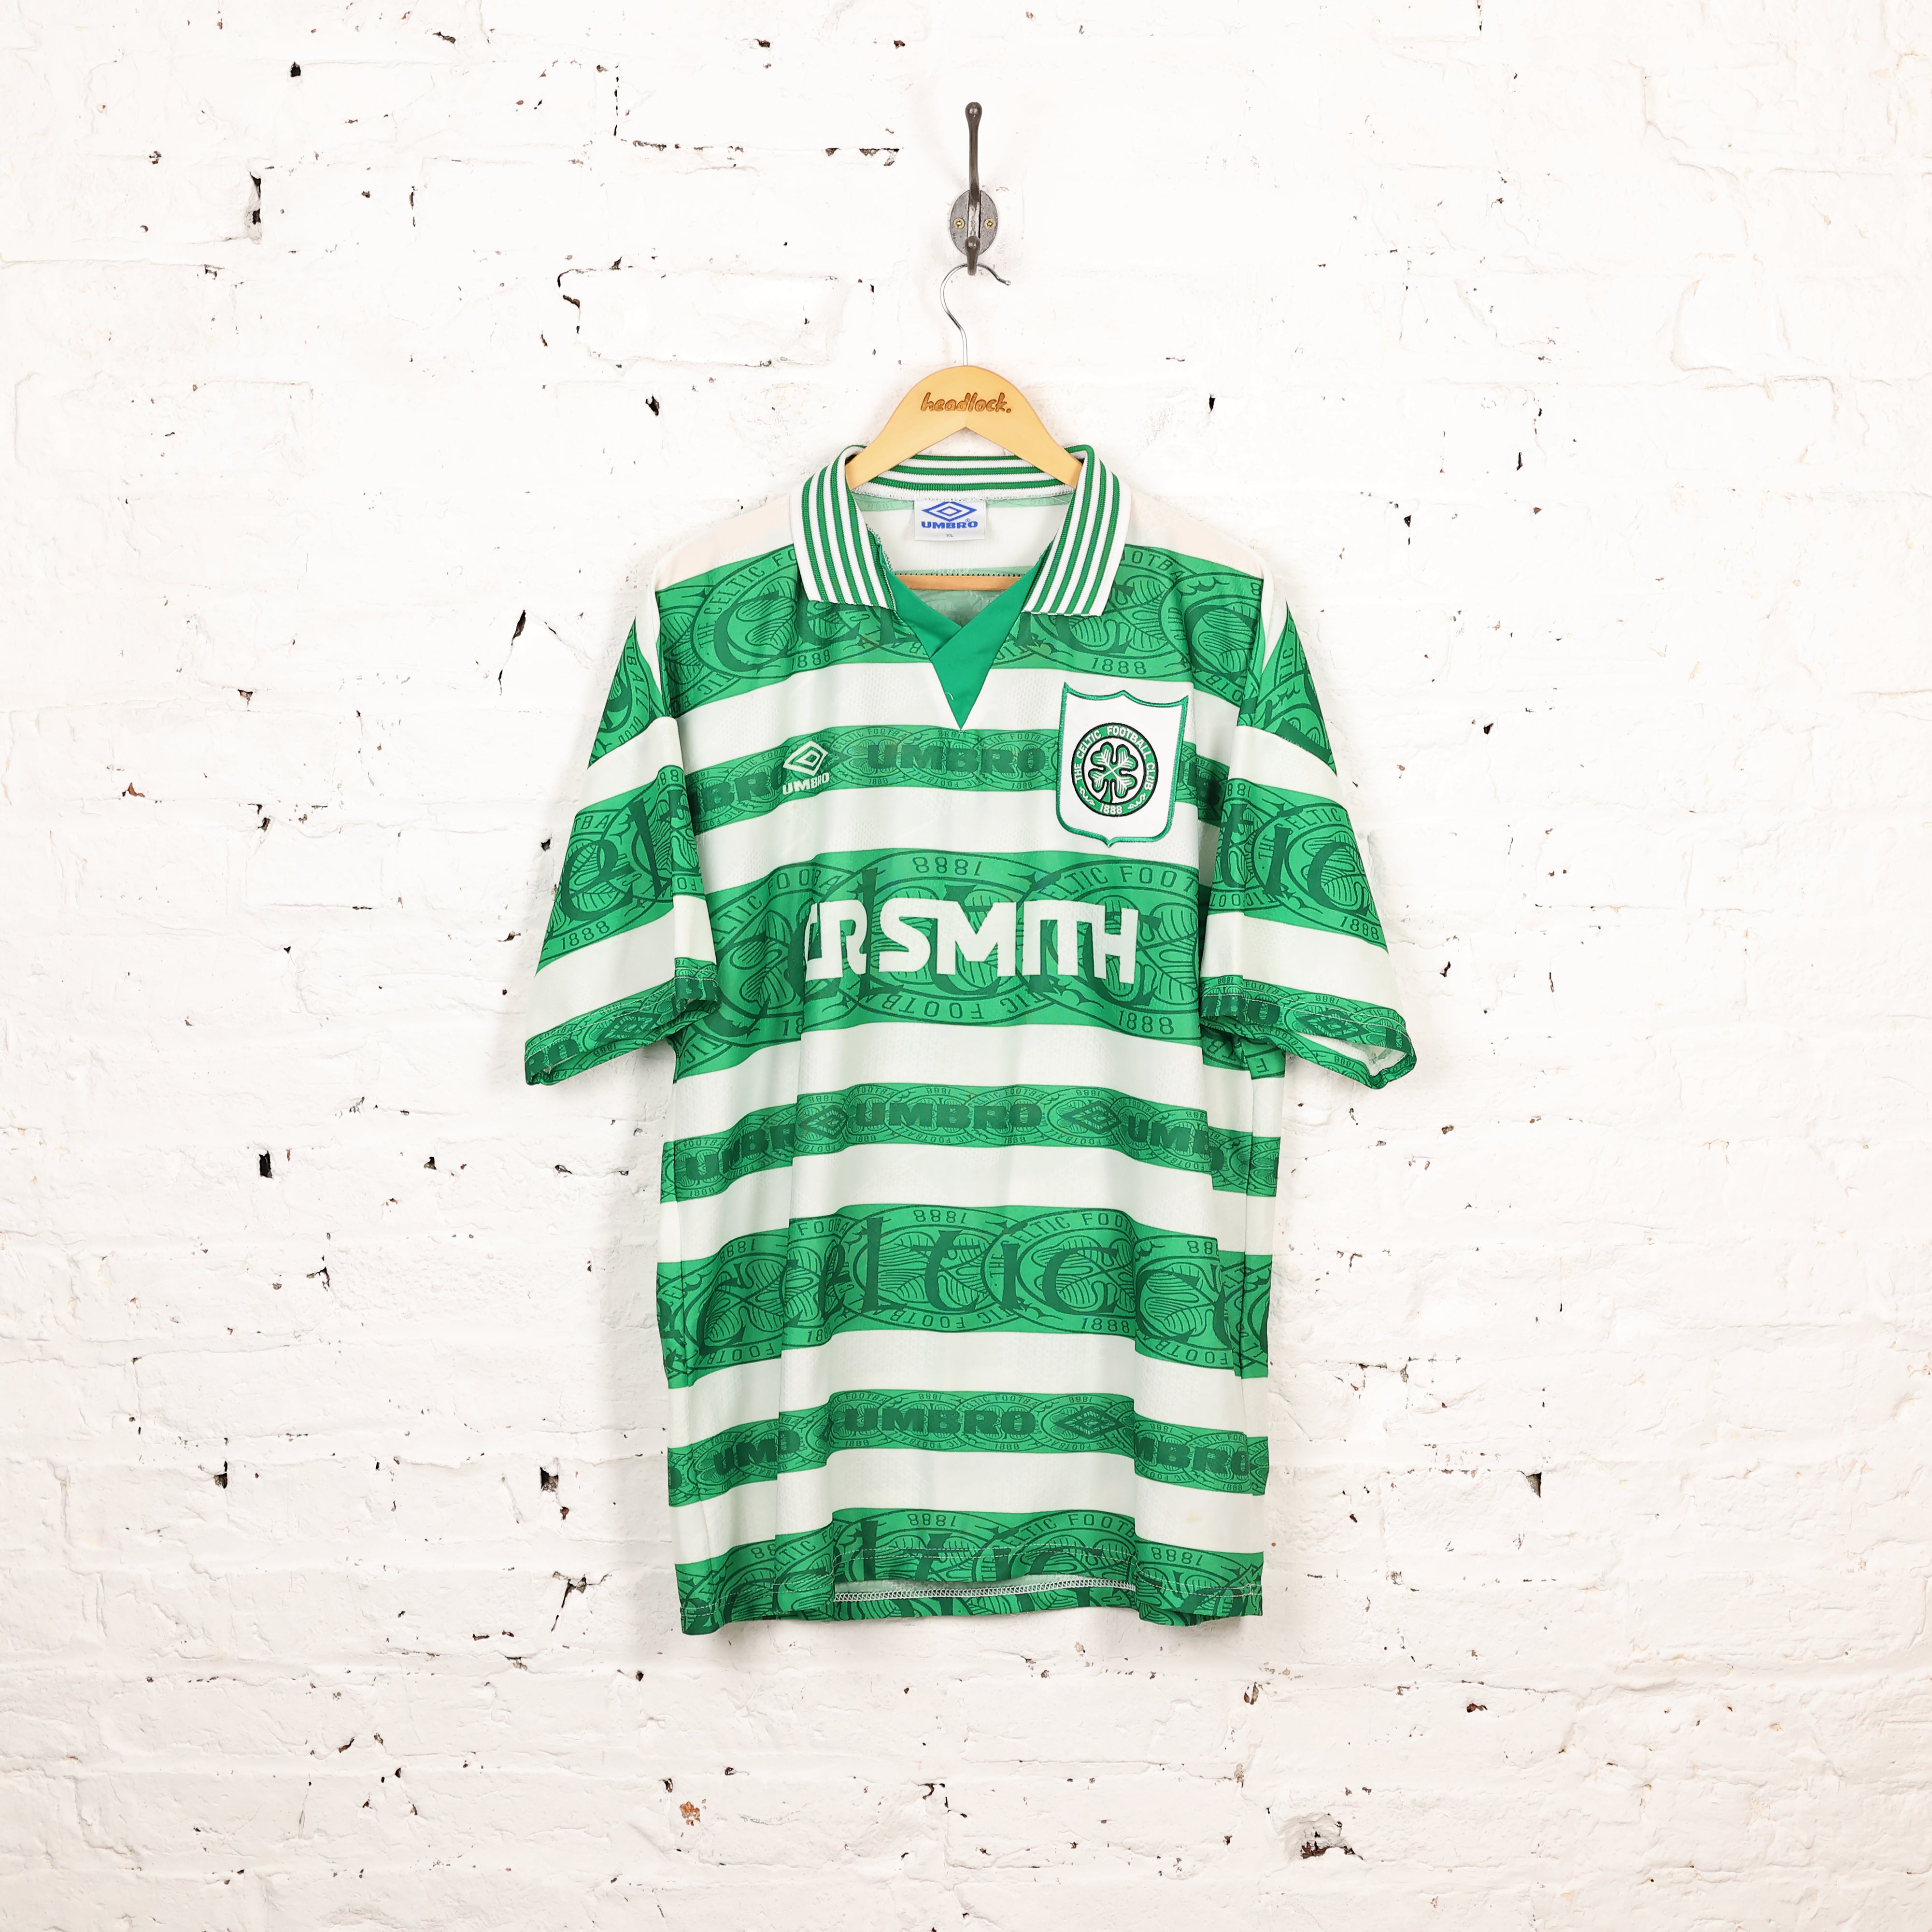 Umbro and The Celtic Football Club 1888 Sr Smith shirt, hoodie